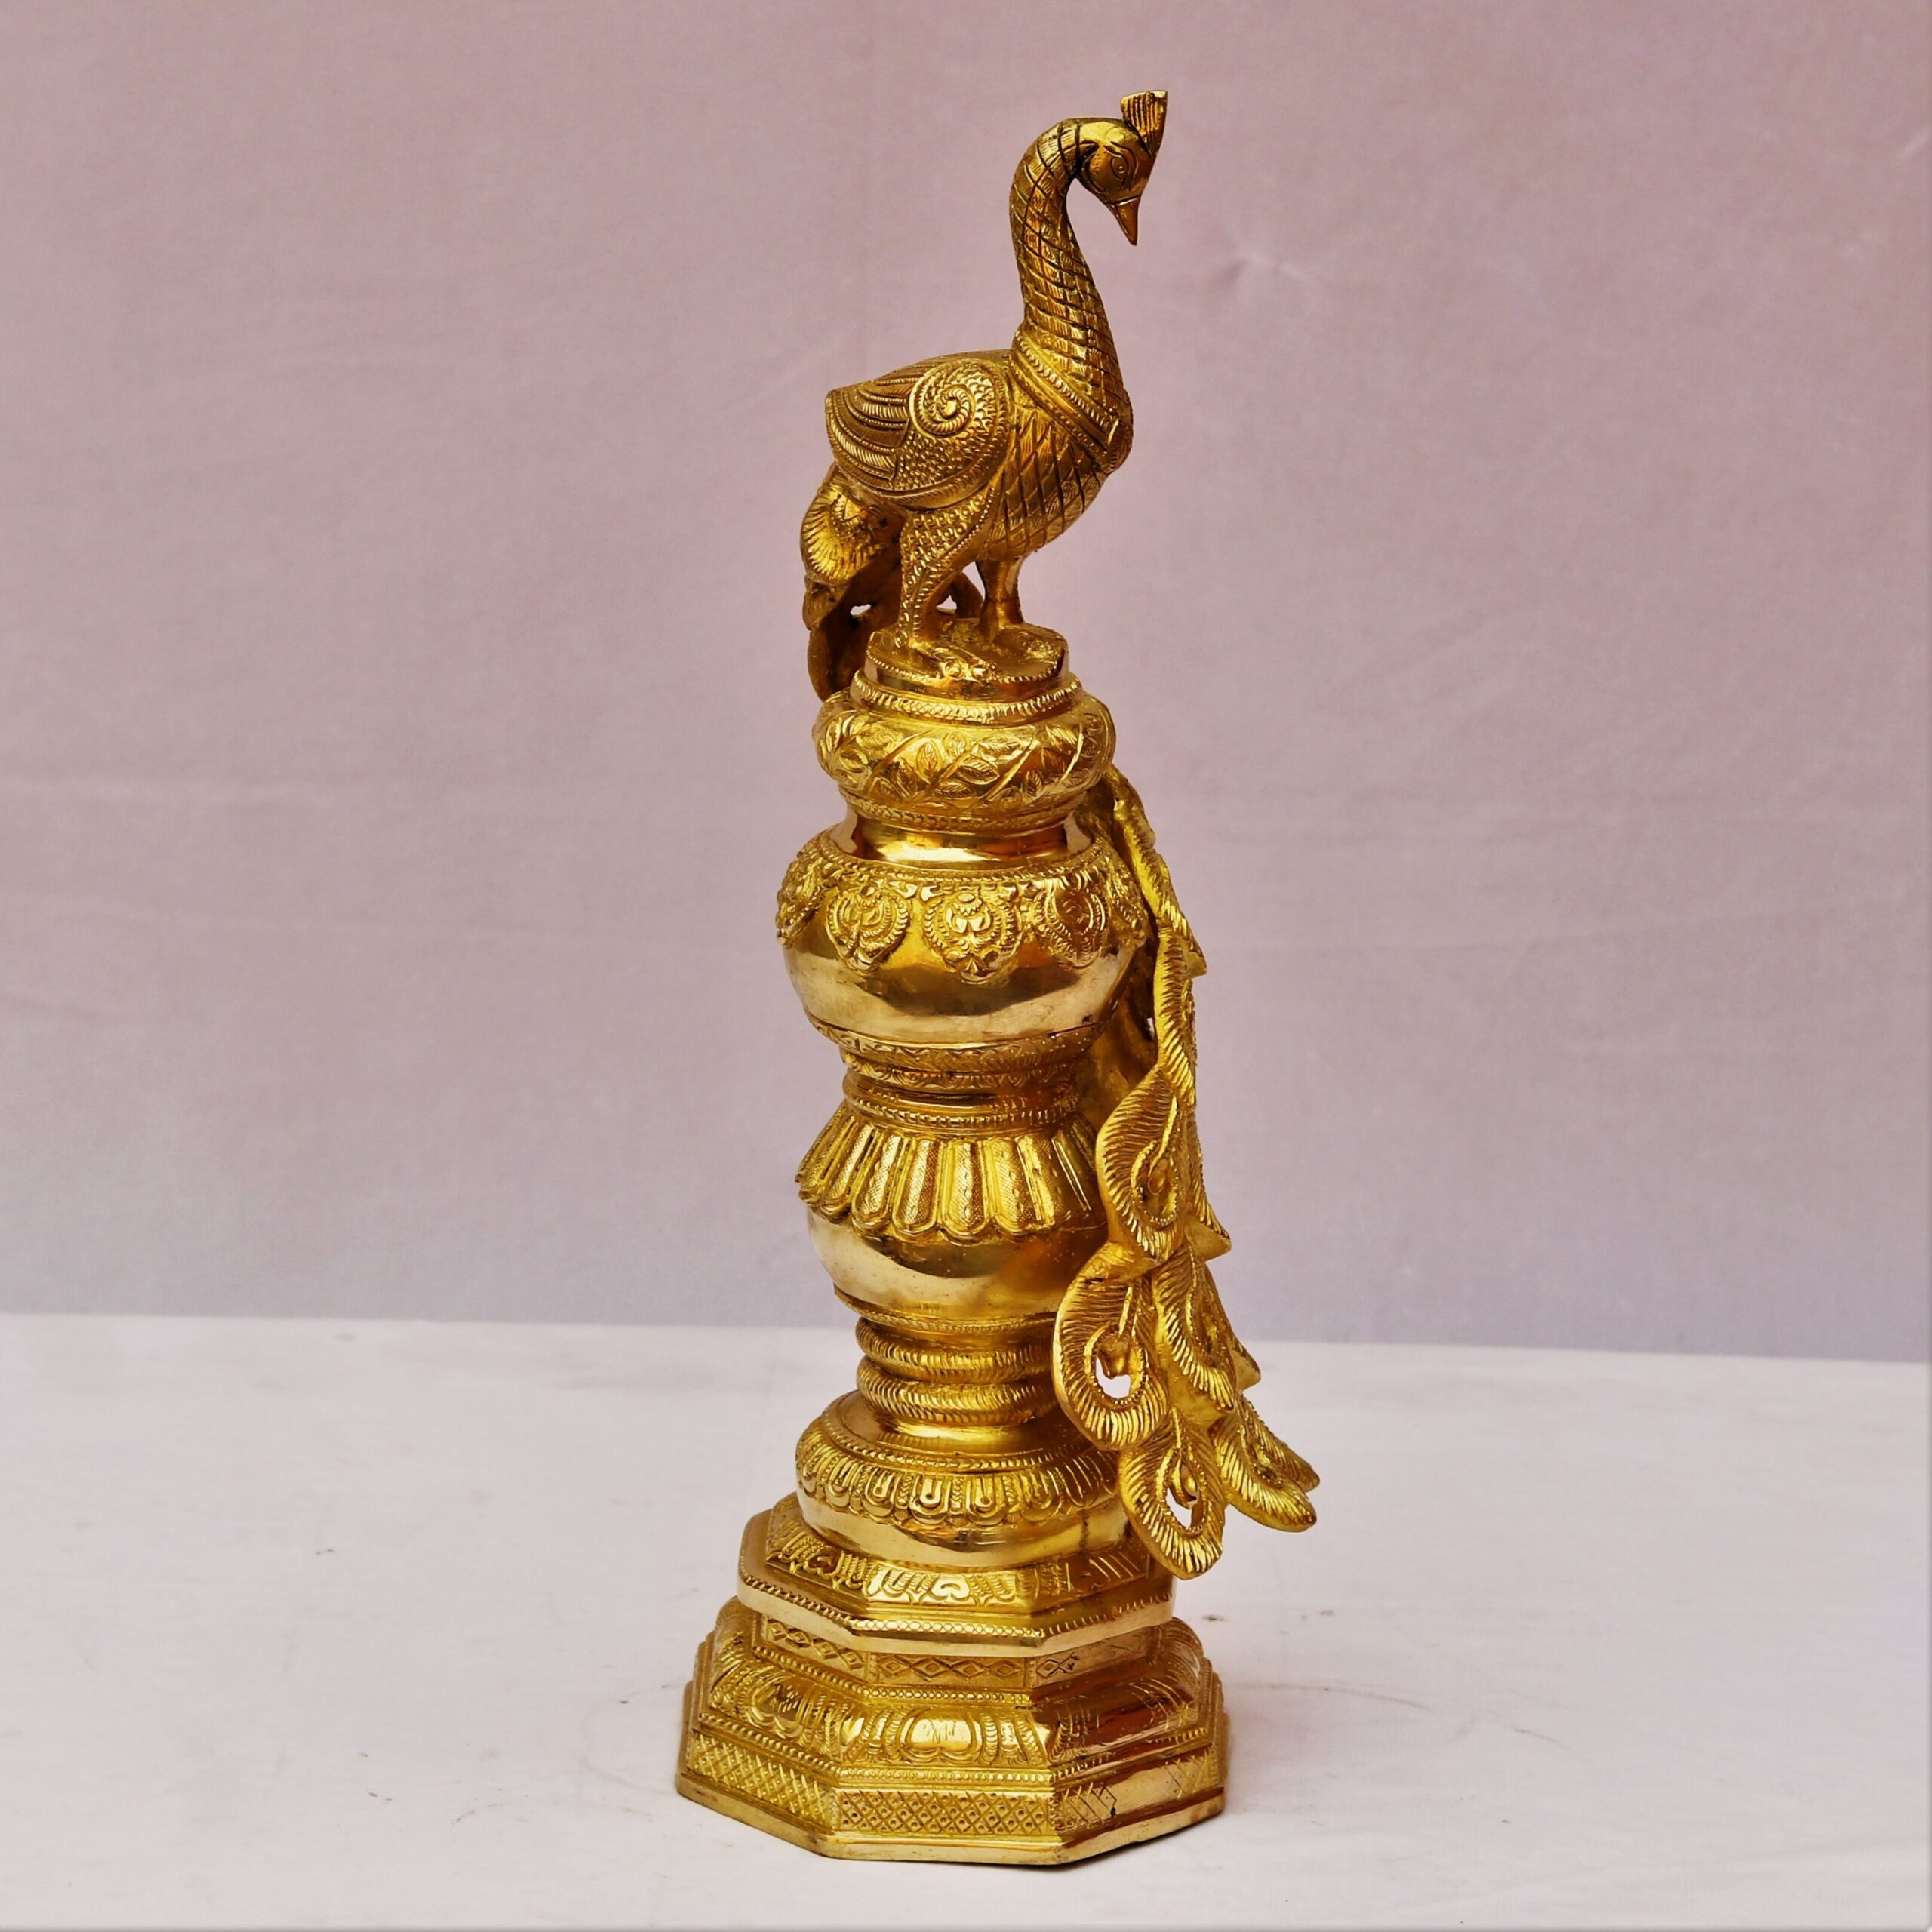 Brass Animal Figurines,Antique Brass Peacock Small Statue Desktop